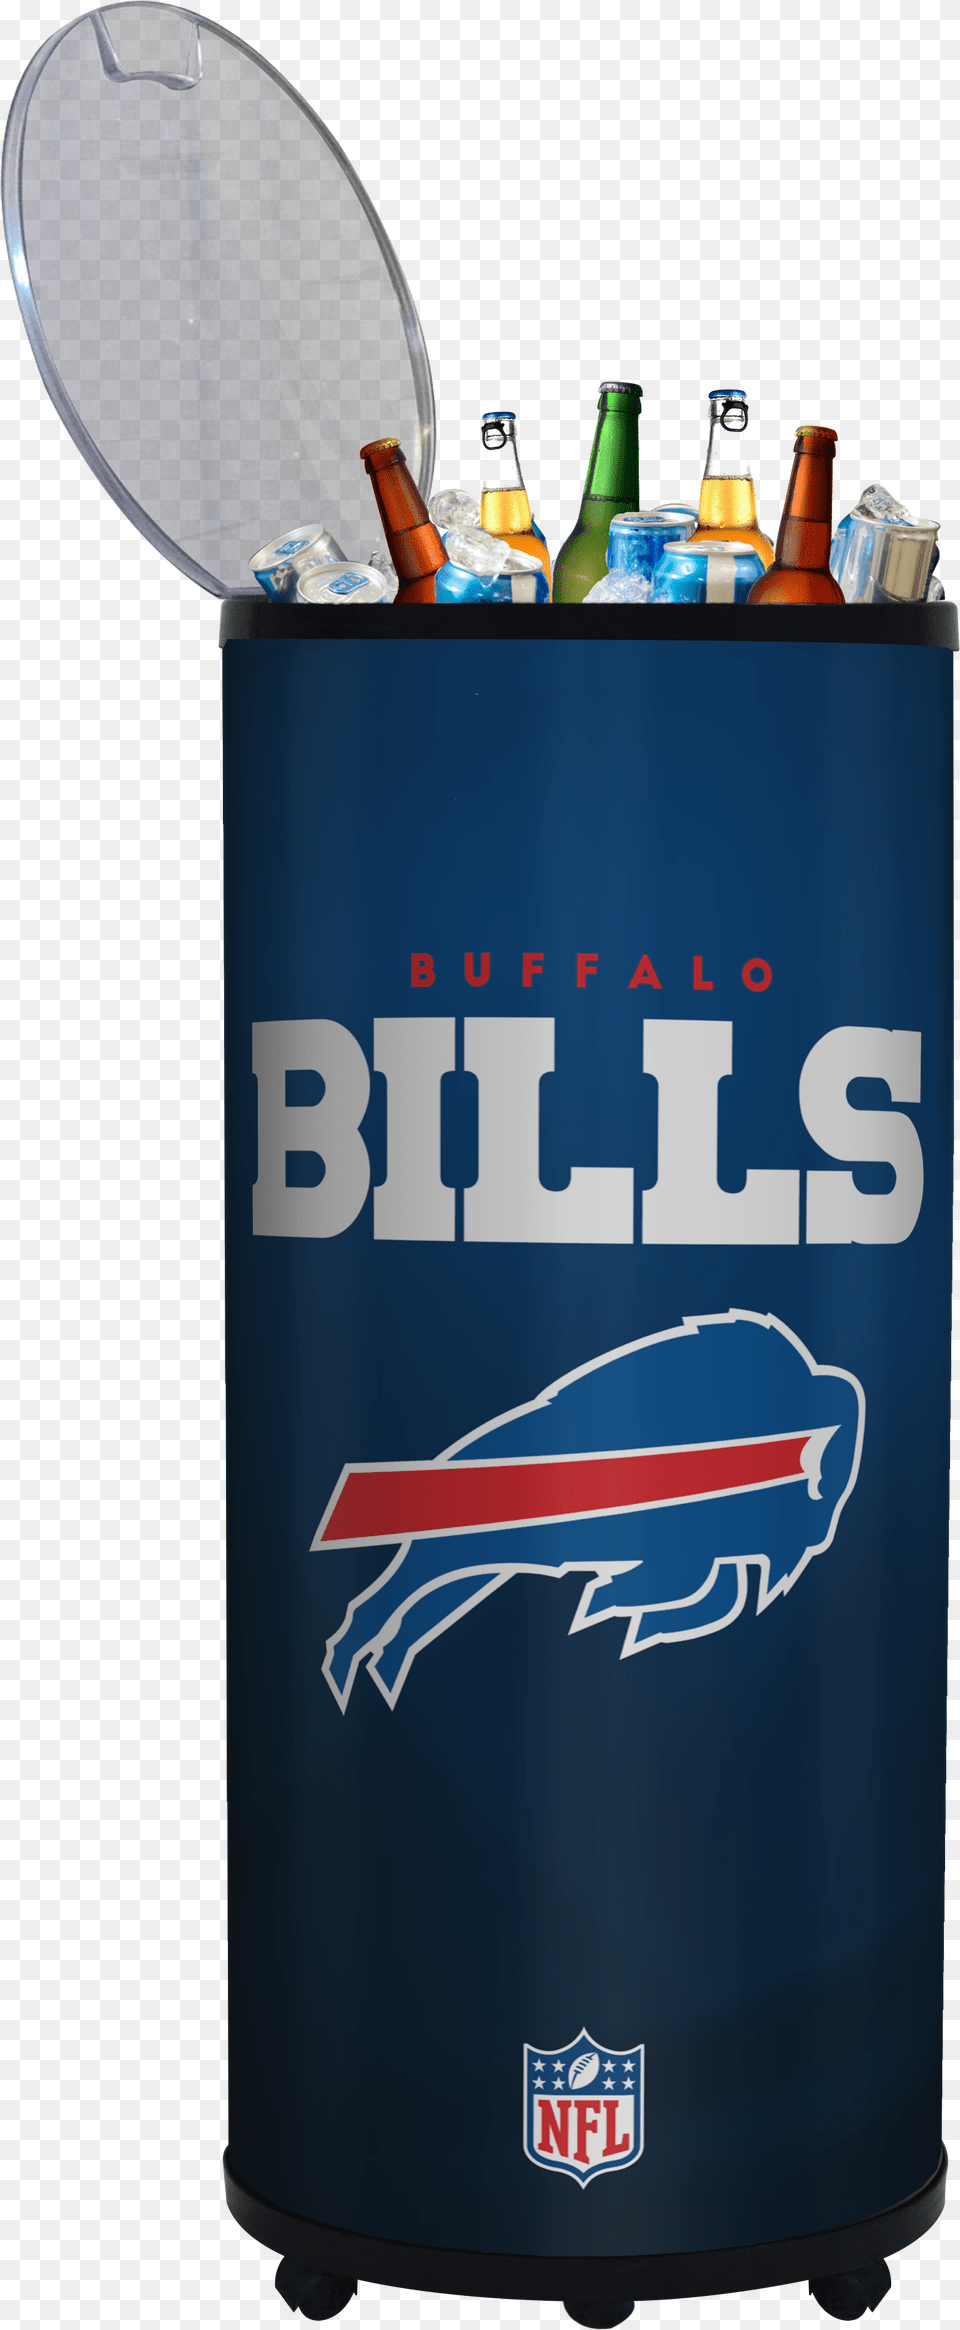 Buffalo Bills 17quot X 40quot Beverage Ice Barrel Cooler Buffalo Bills, Bottle, Alcohol, Beer, Appliance Free Transparent Png